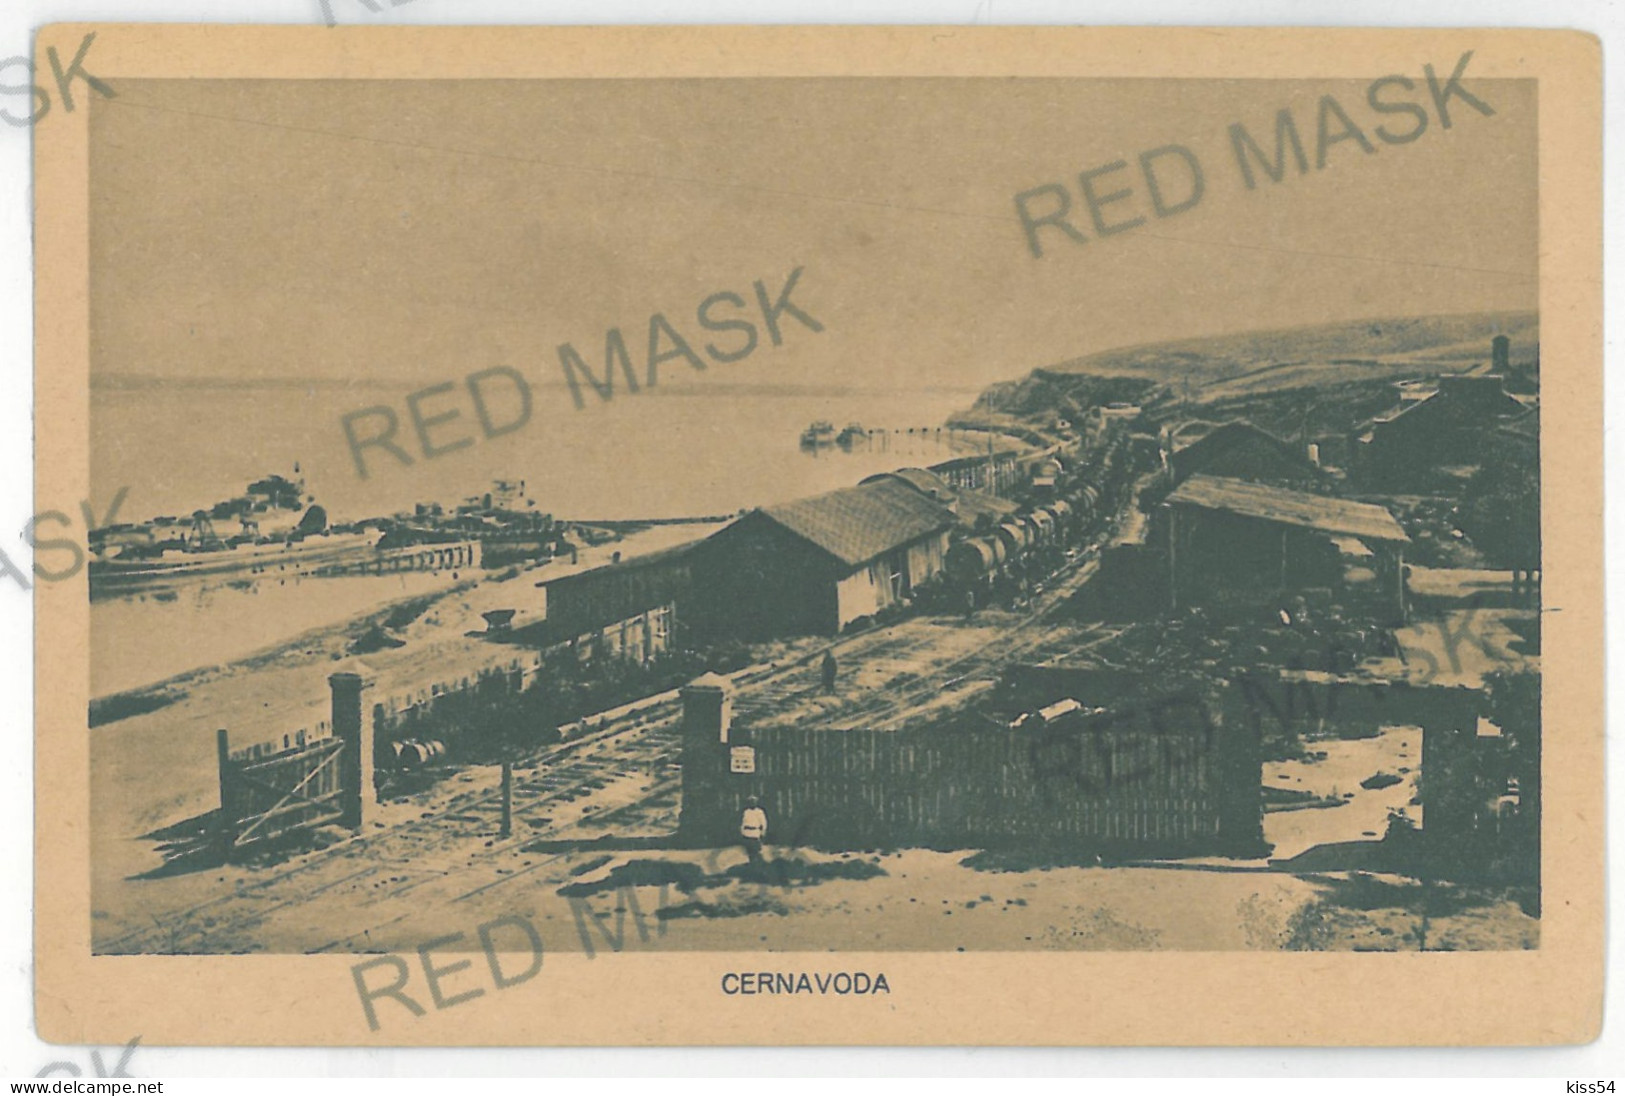 RO 77 - 11413 CERNAVODA, Harbor, Railway, Romania - Old Postcard - Unused - Romania